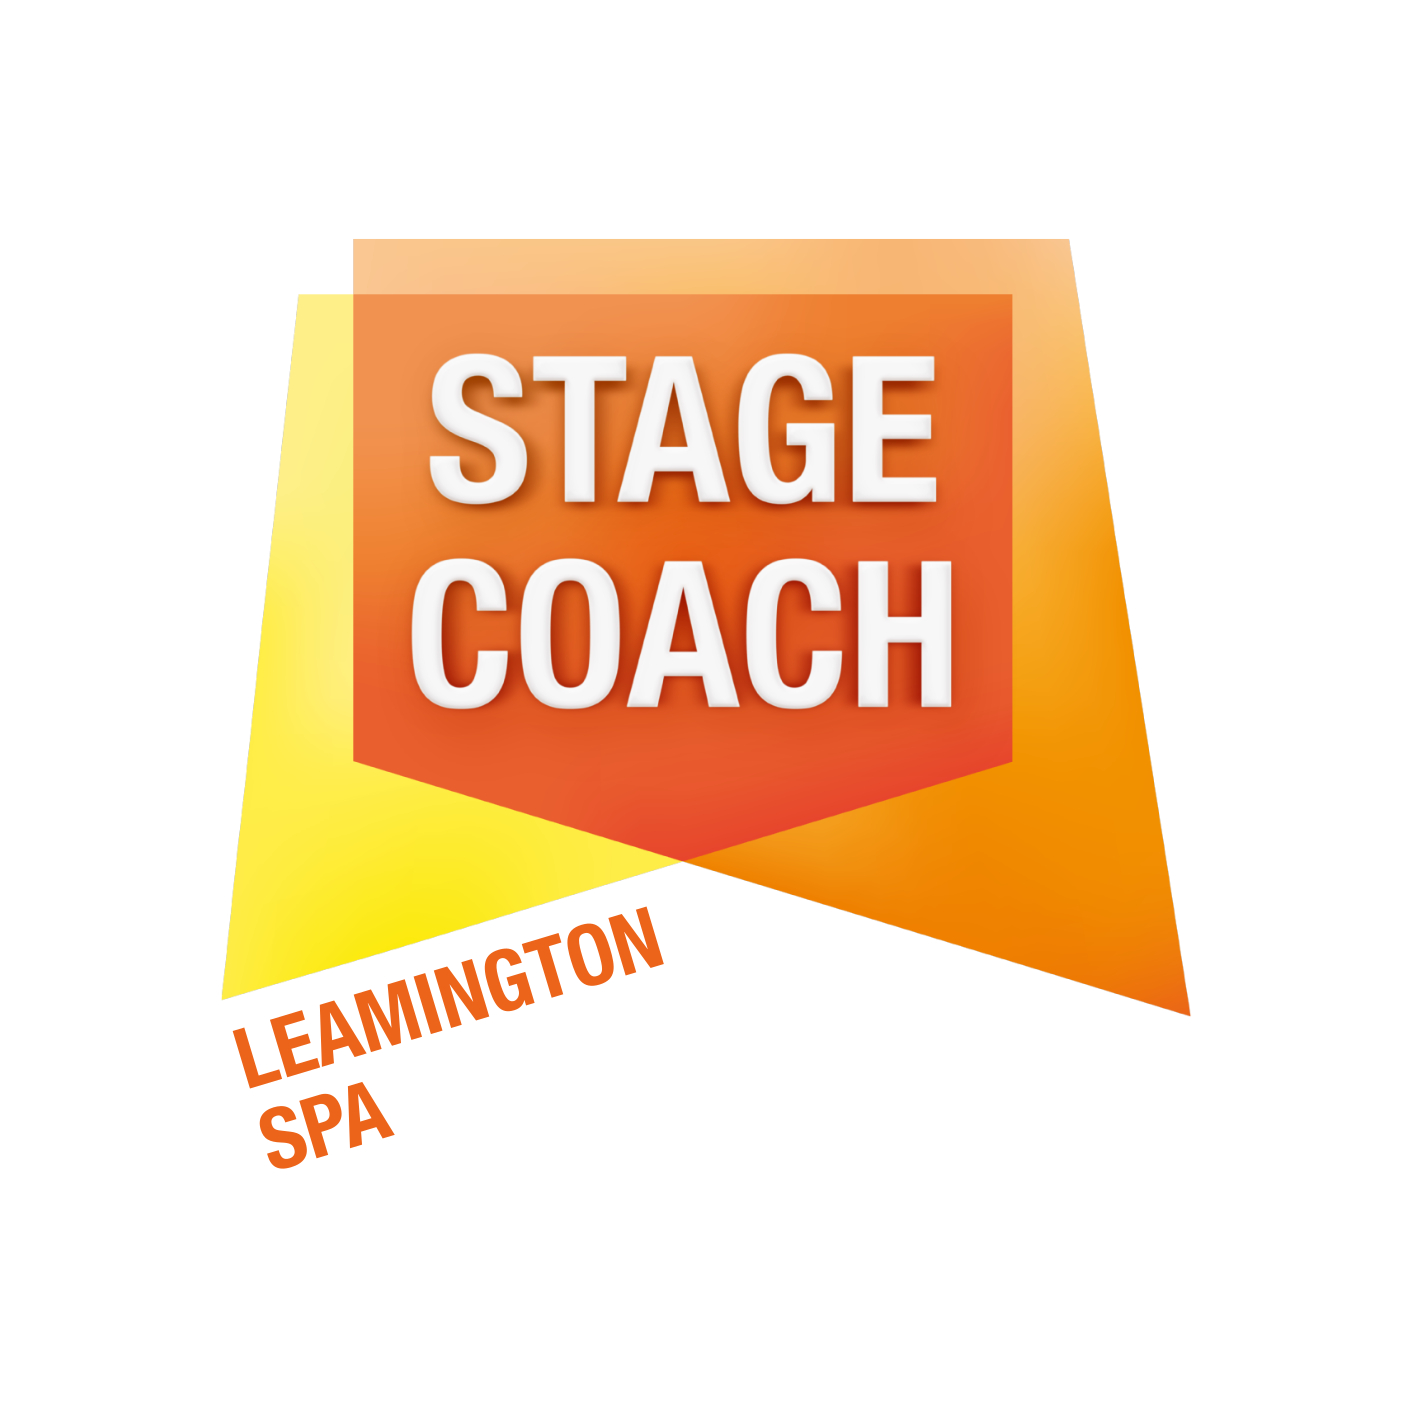 Stagecoach Leamington Spa's logo